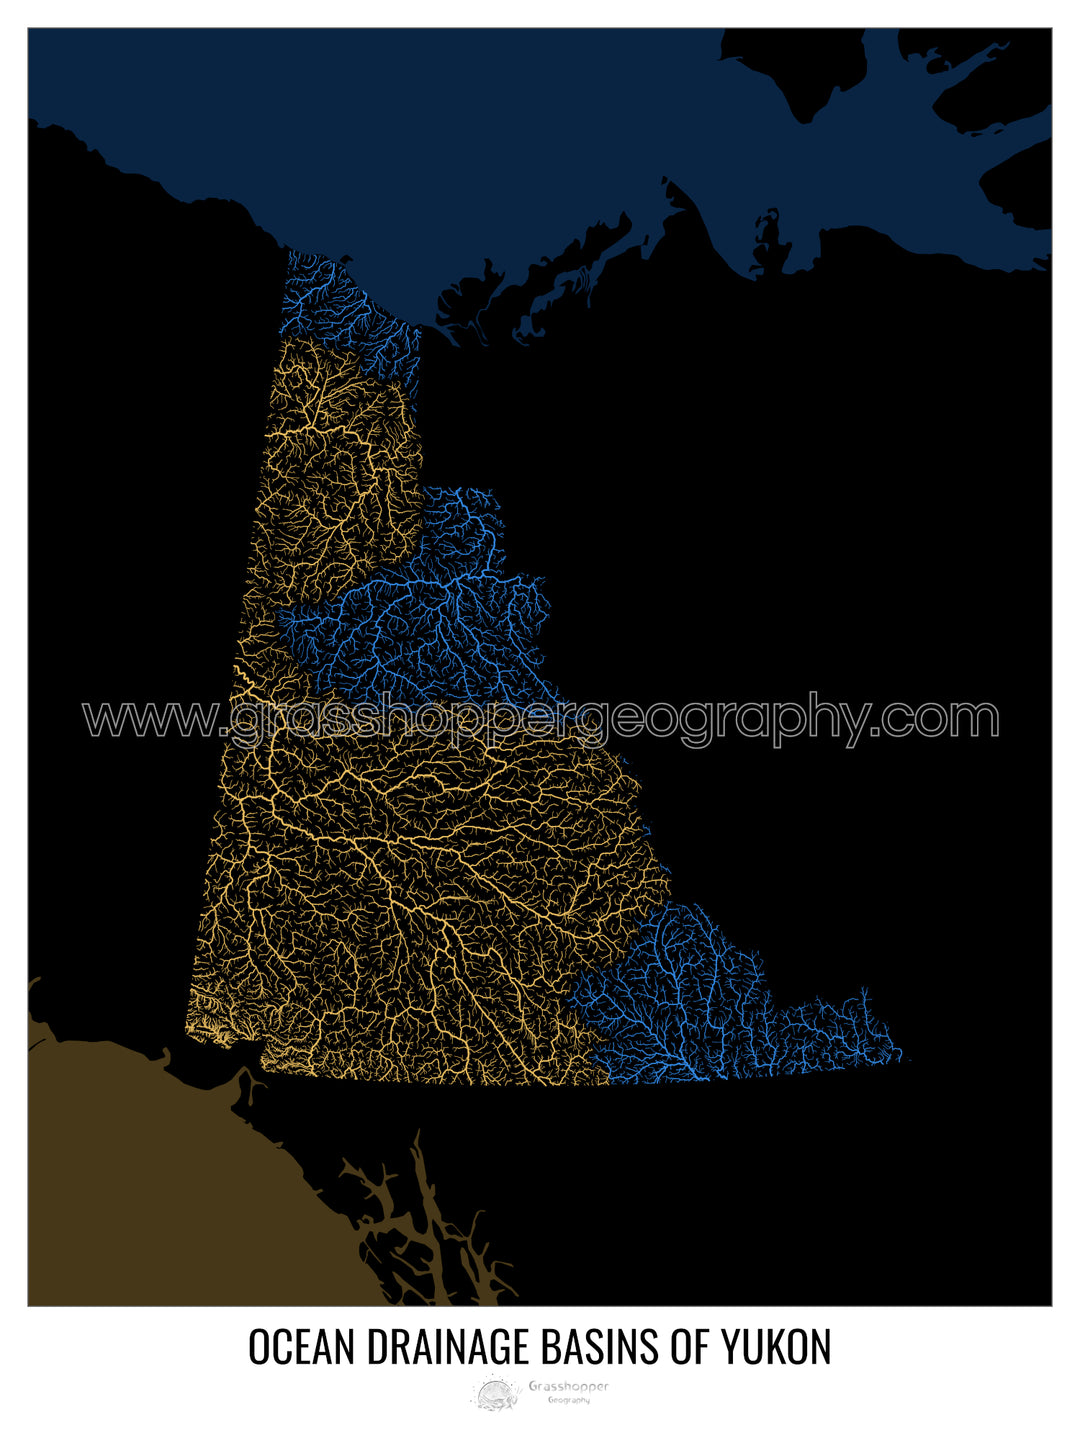 Yukon - Carte du bassin versant océanique, noir v2 - Impression d'art photo